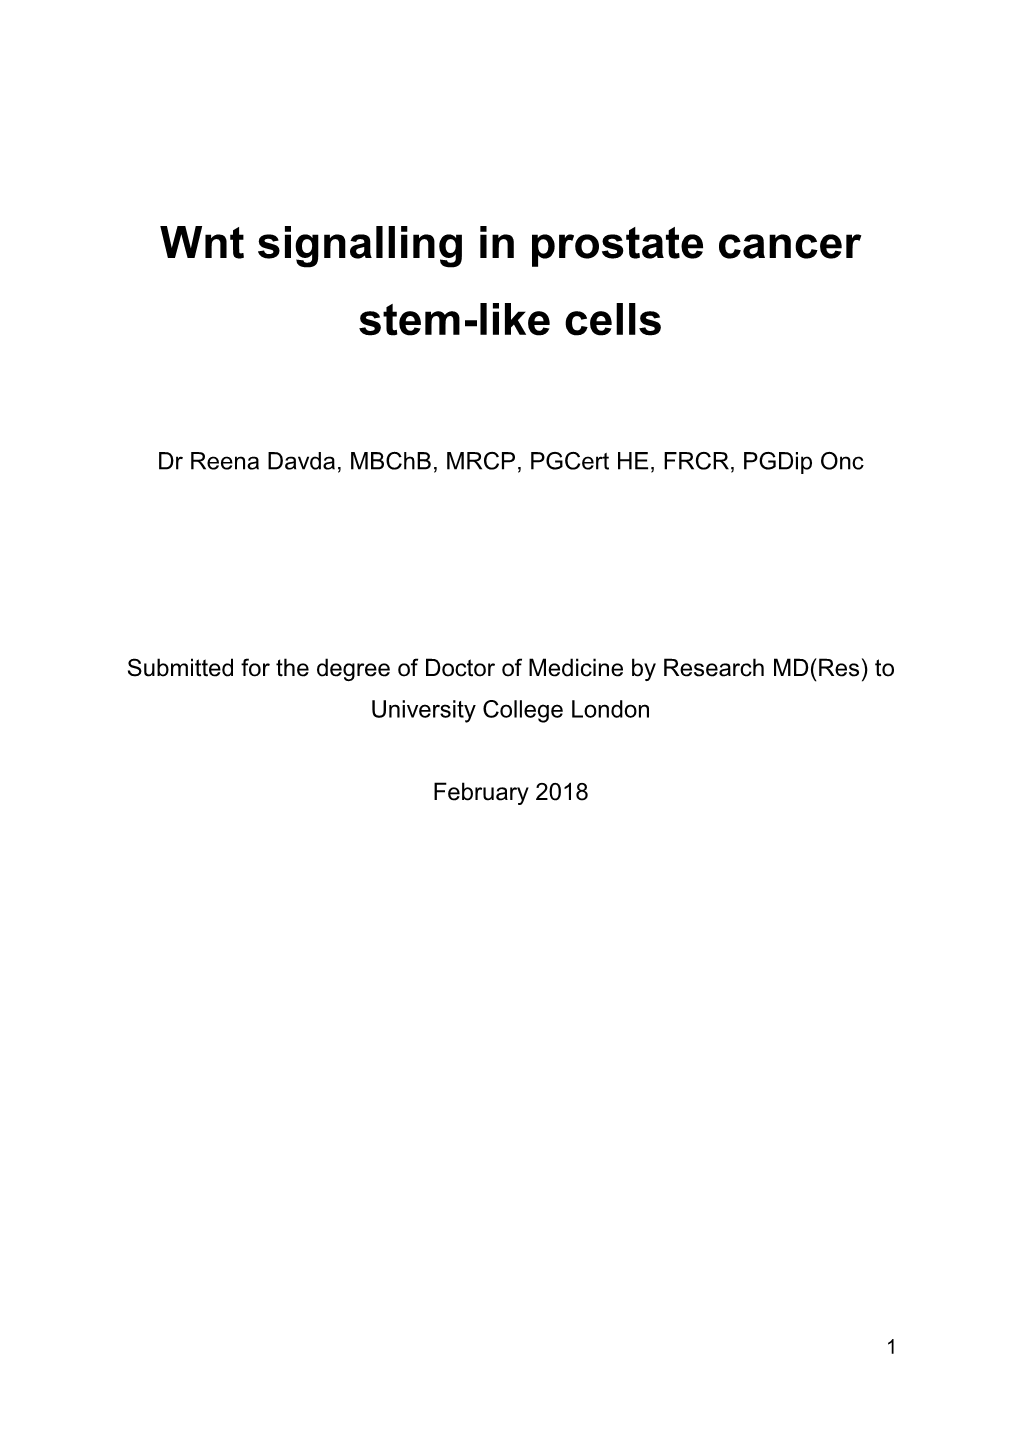 Wnt Signalling in Prostate Cancer Stem-Like Cells